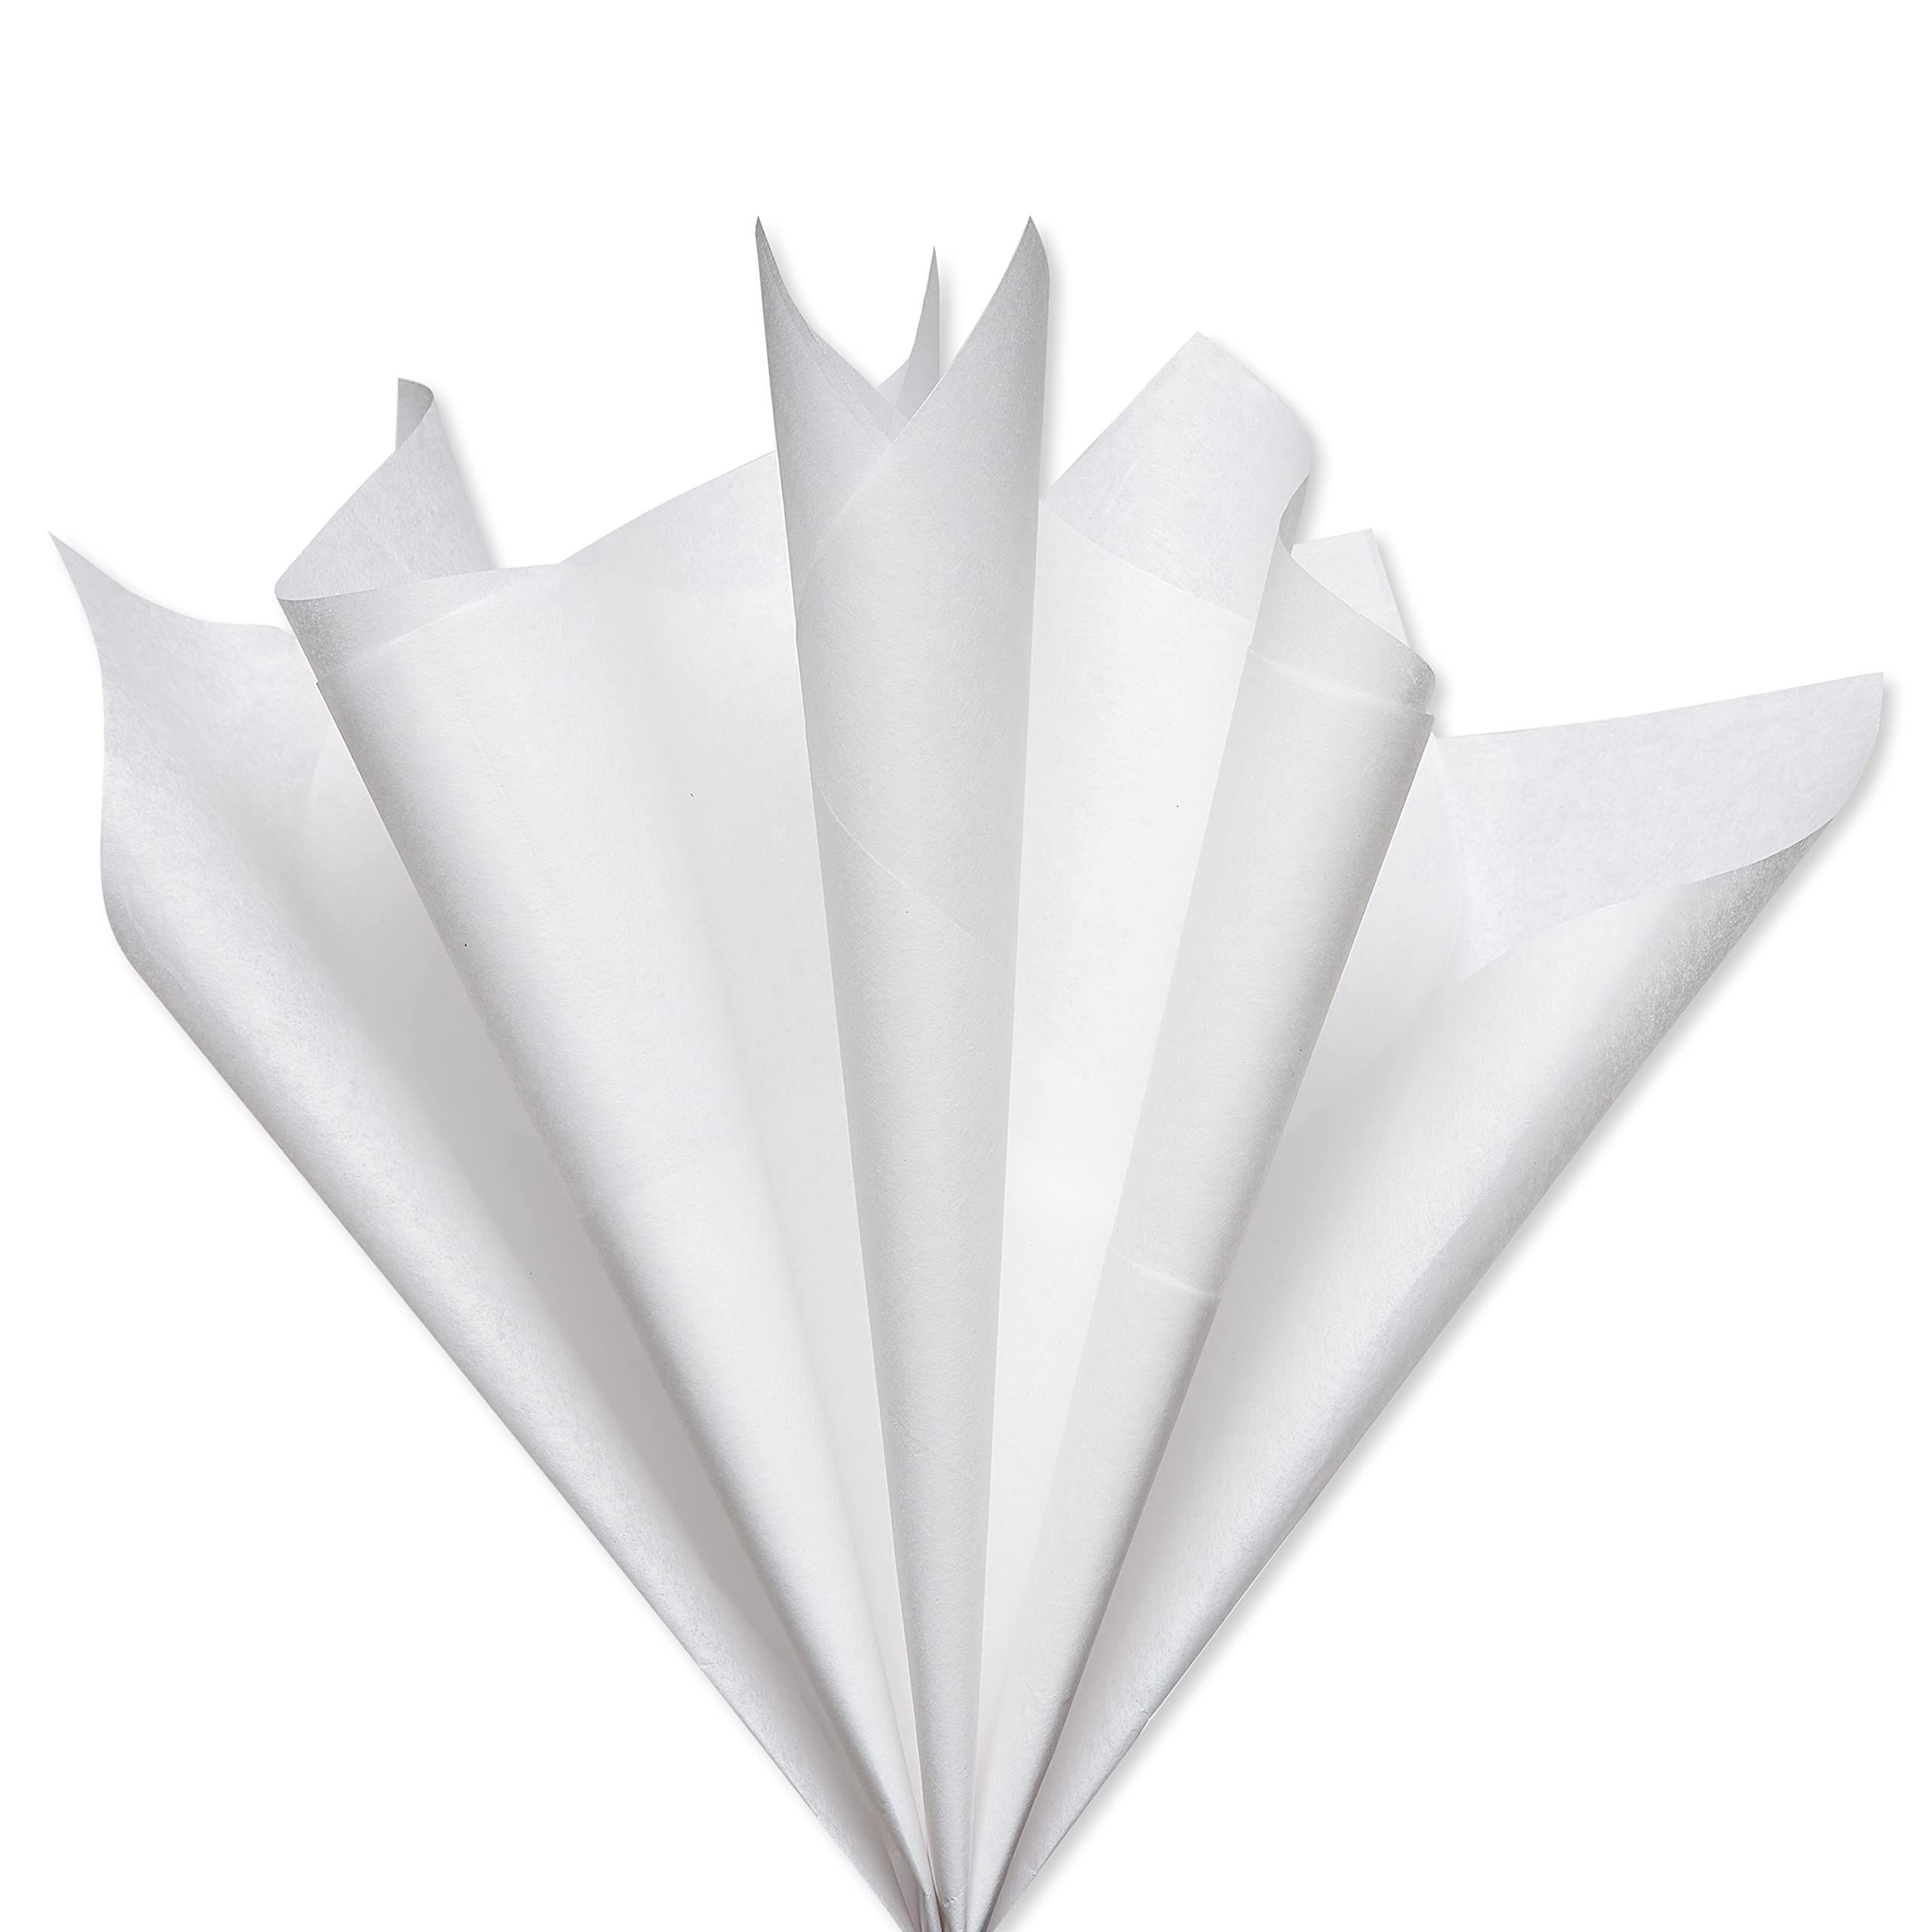 American Greetings 50 Sheet White Tissue Paper 20